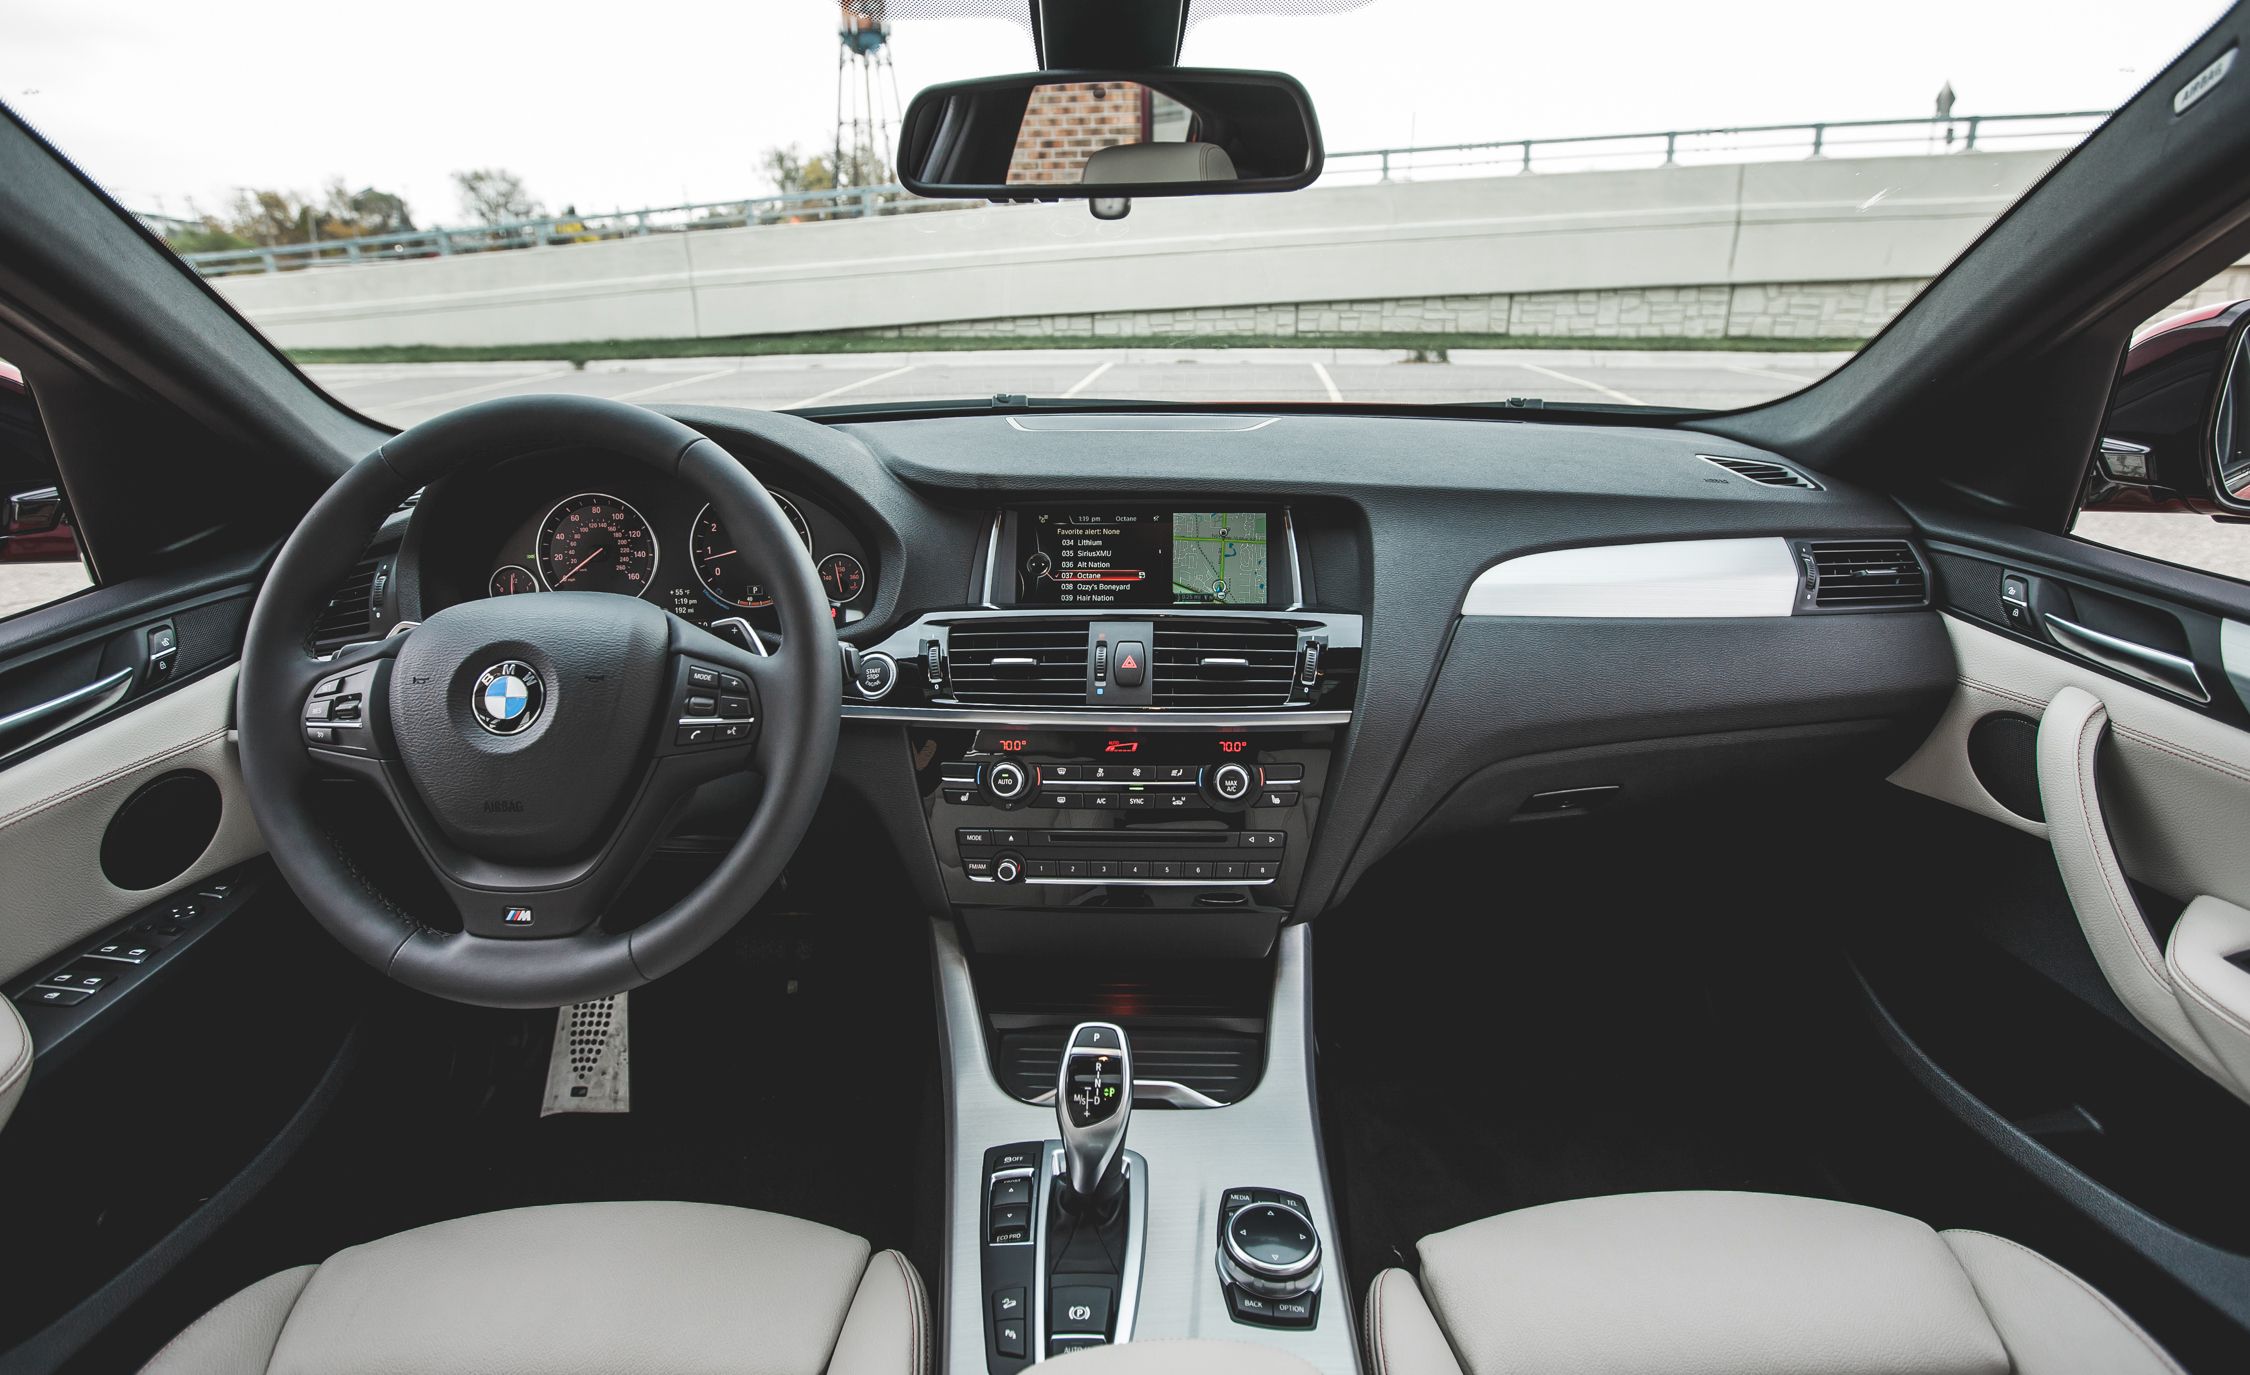 2015 BMW X4 XDrive28i Interior (View 9 of 29)